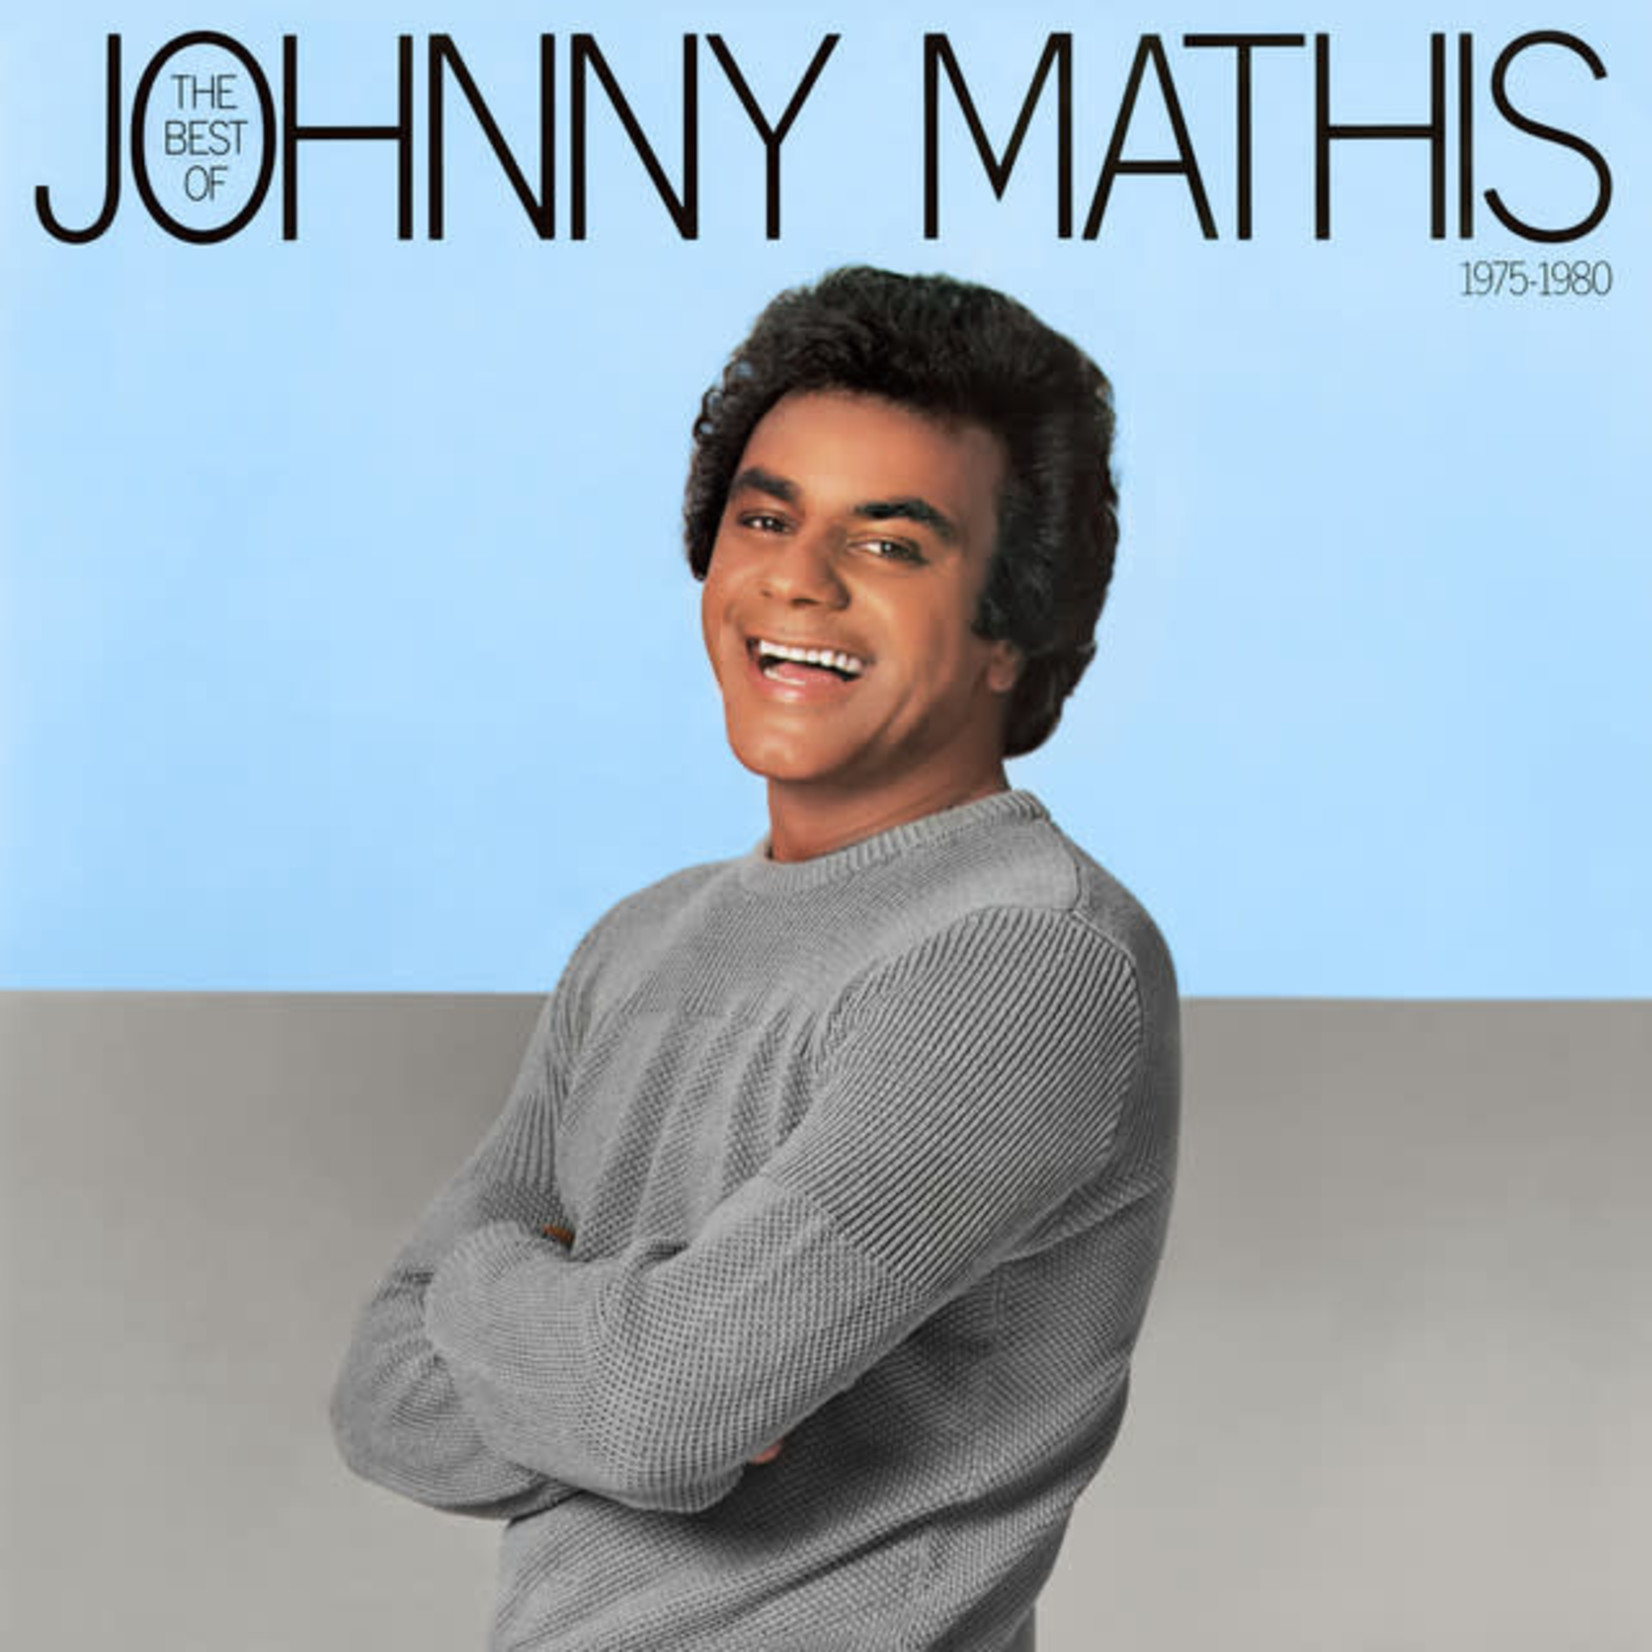 [Vintage] Johnny Mathis - Best of 1975-1980